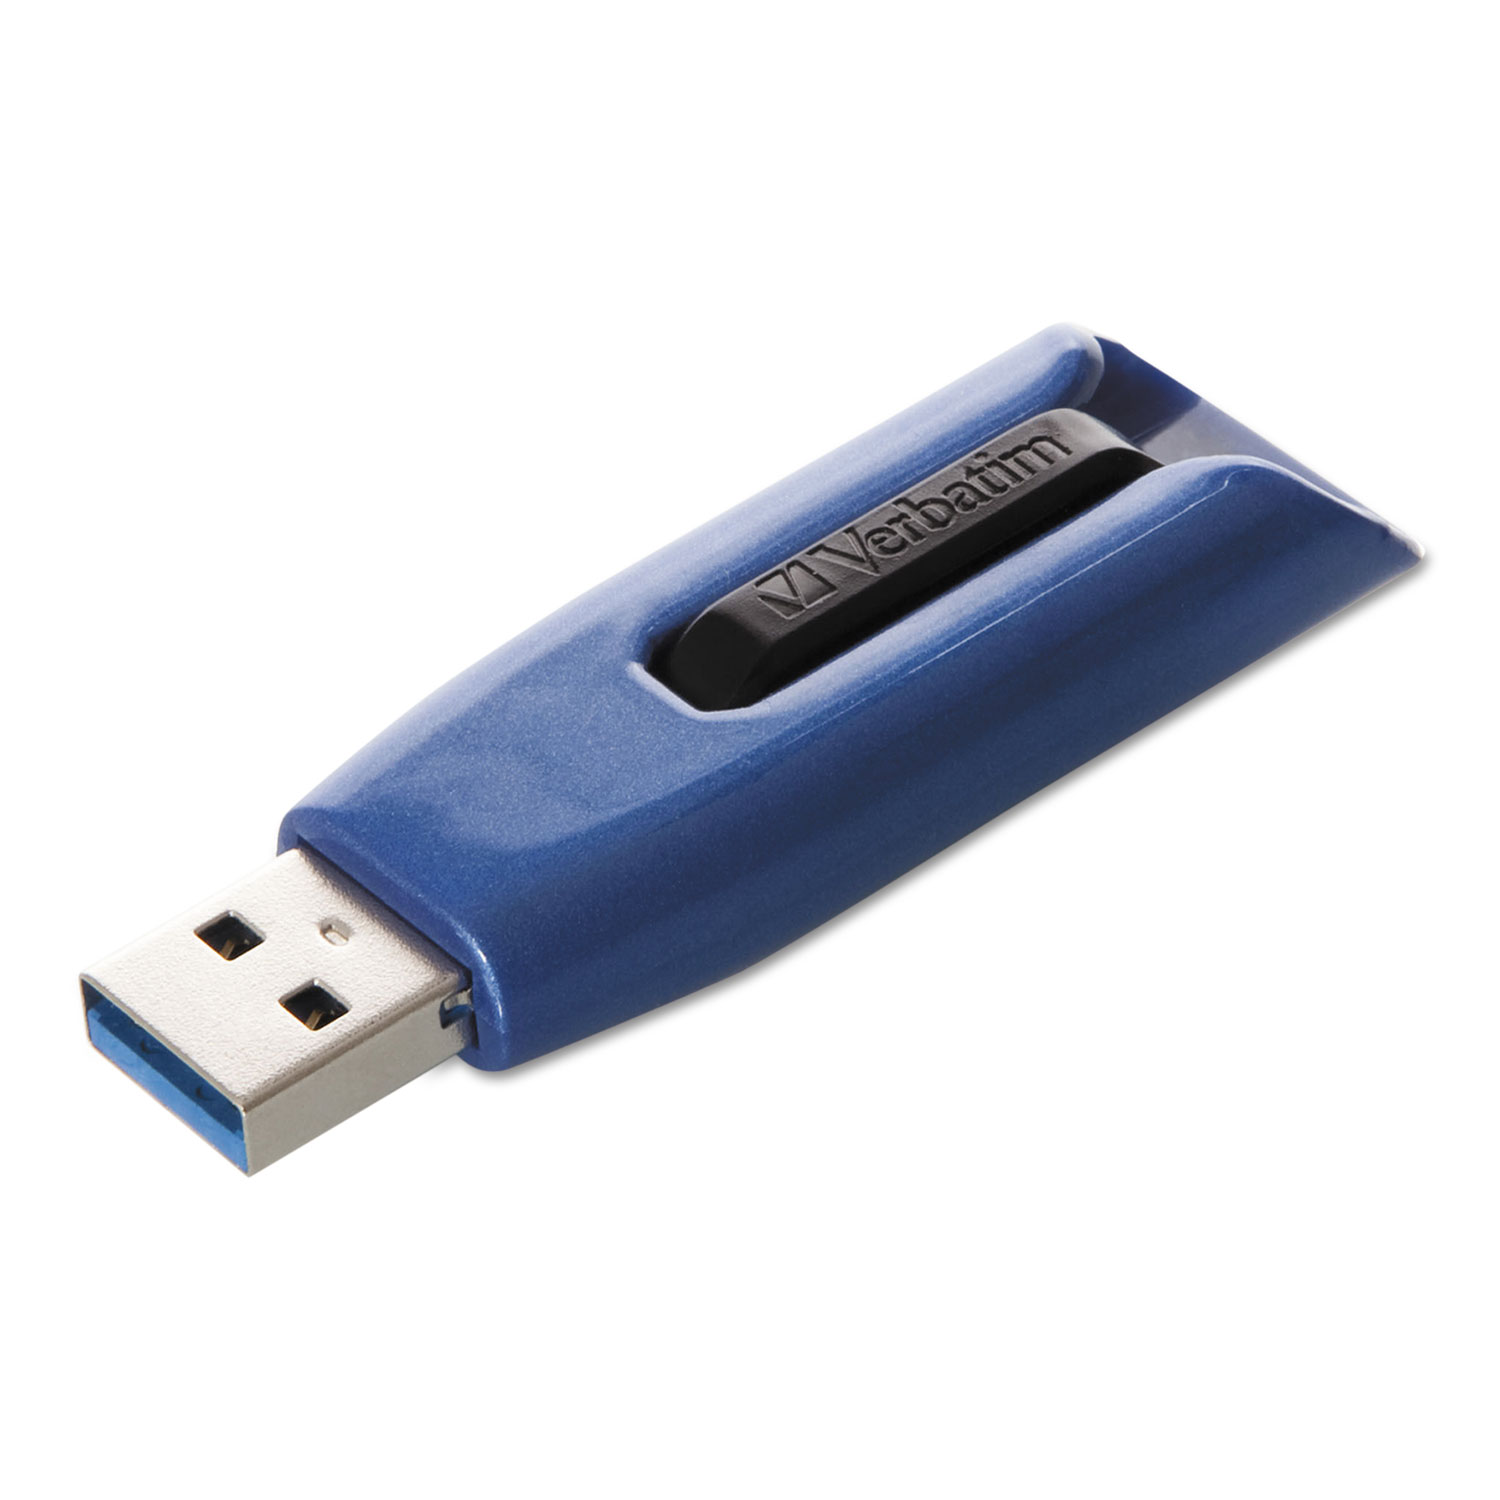  Verbatim 49806 V3 Max USB 3.0 Flash Drive, 32 GB, Blue (VER49806) 